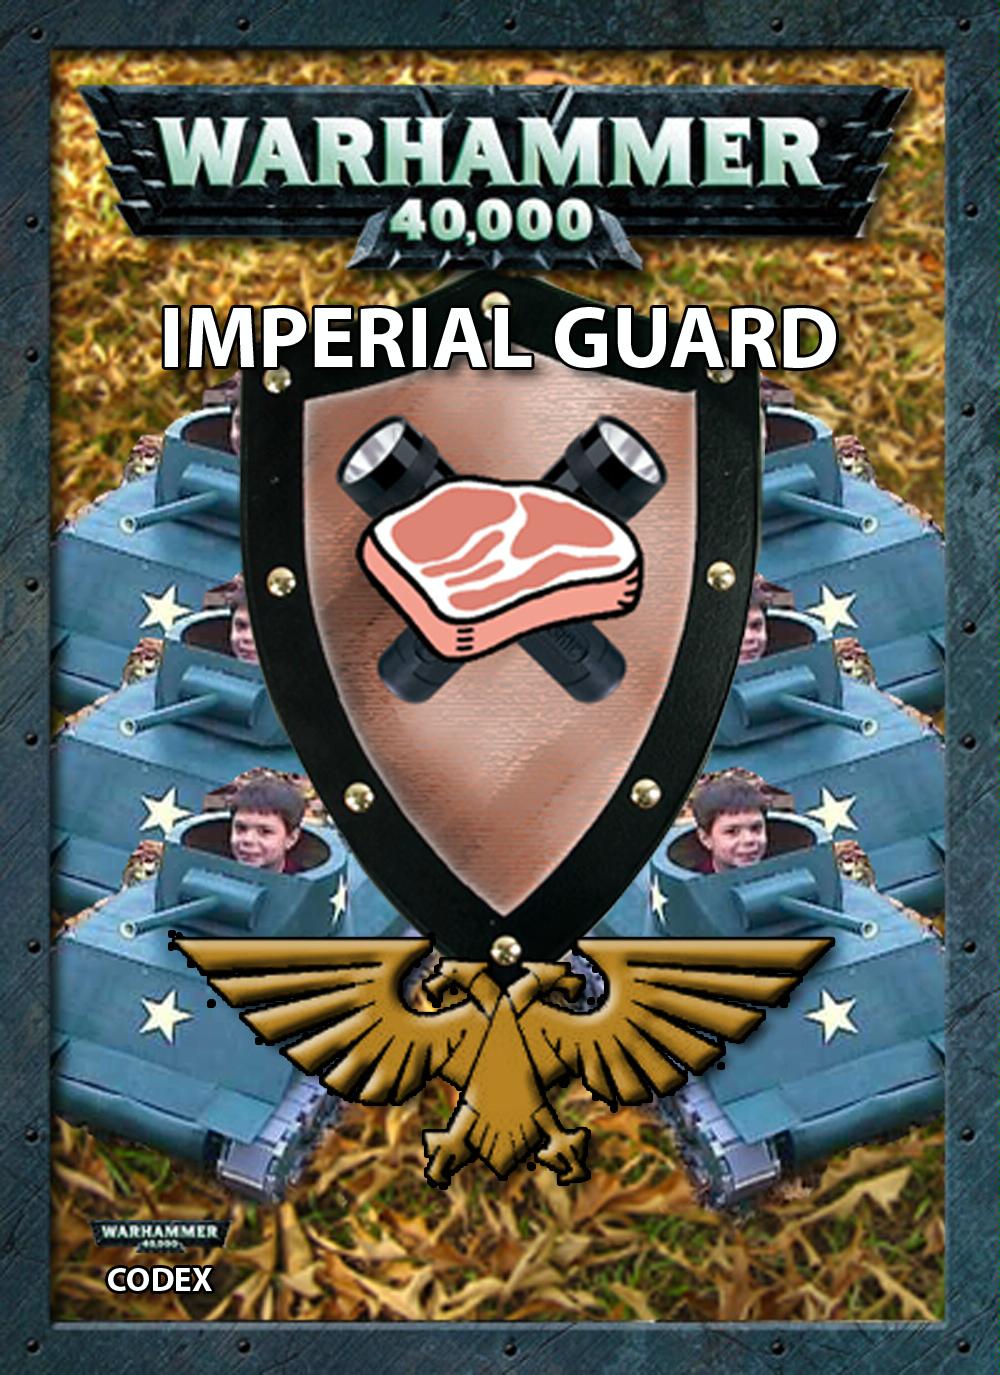 Humor, Imperial Guard